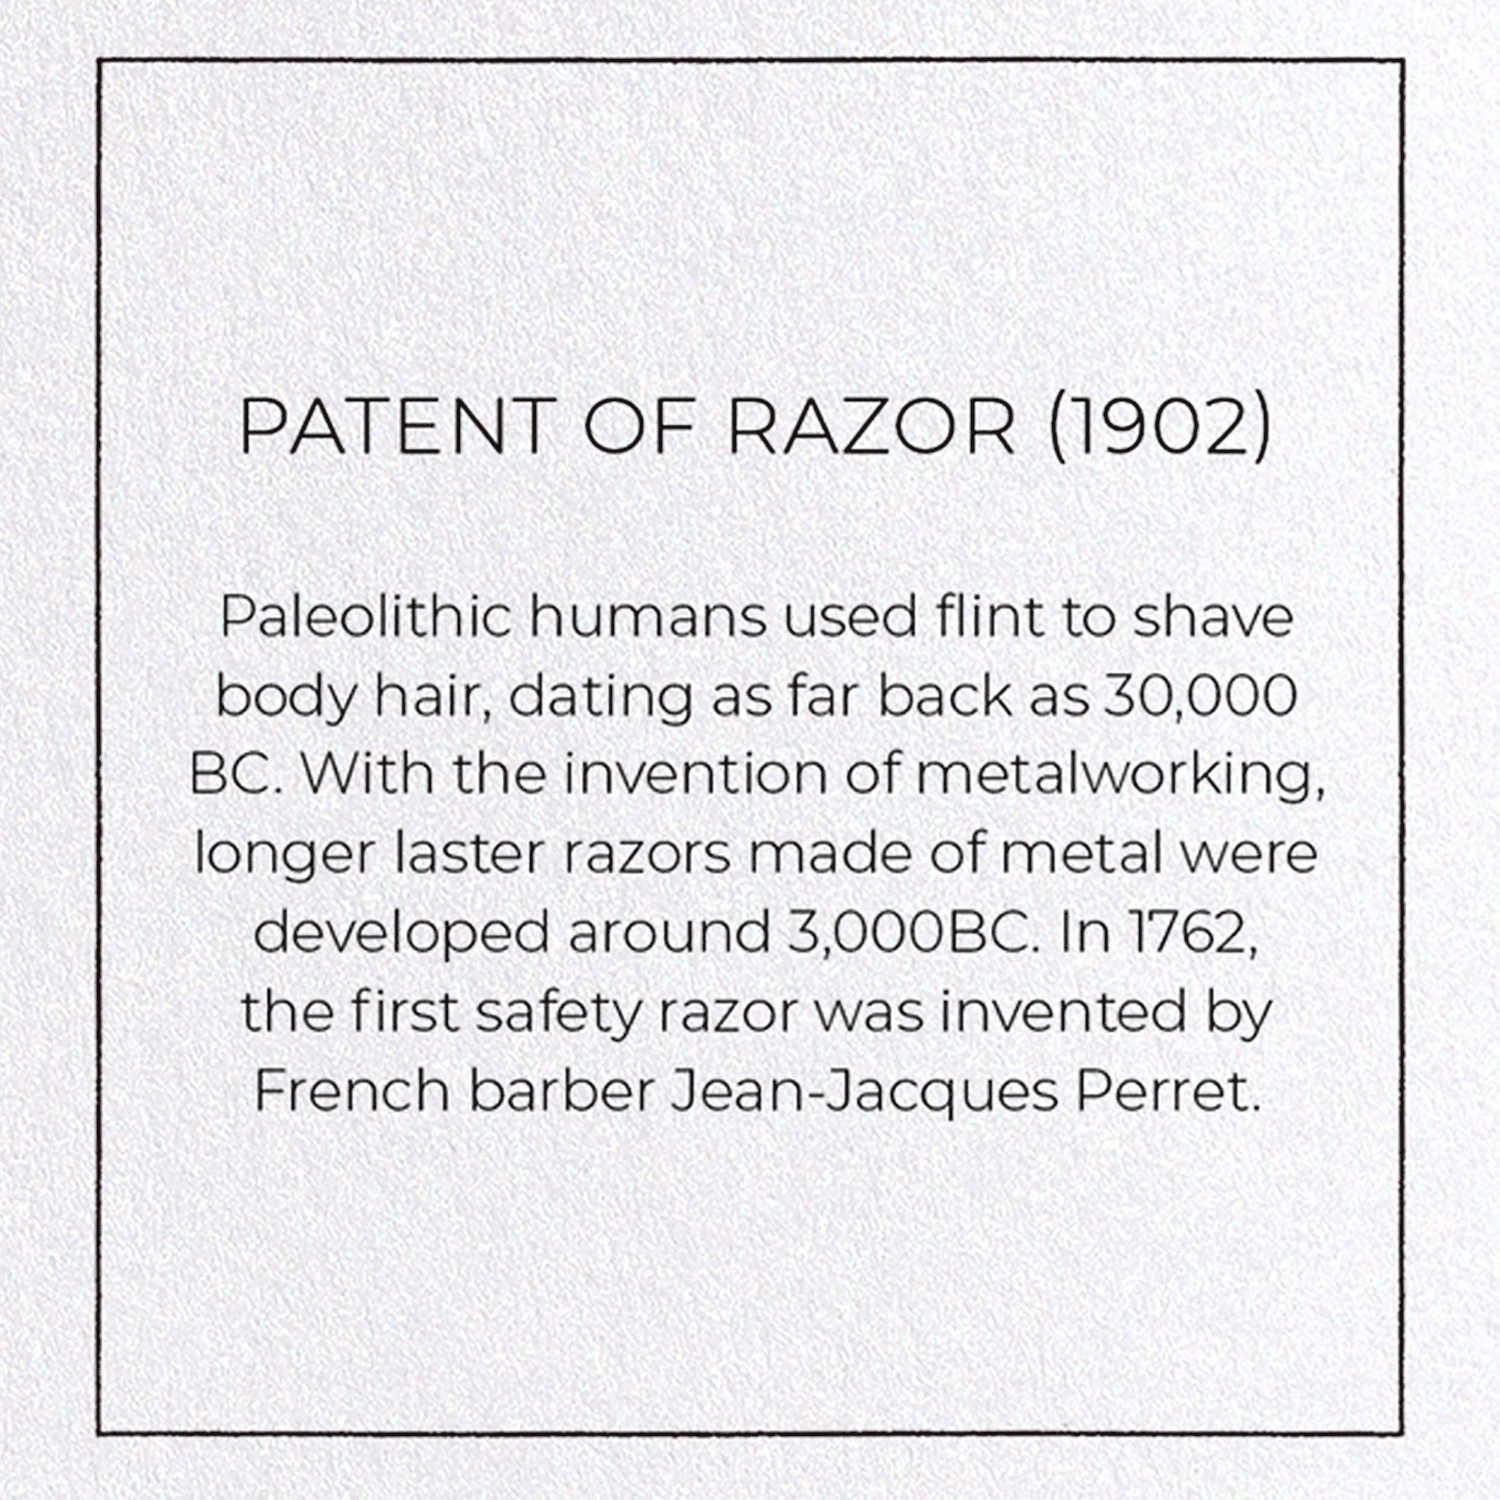 PATENT OF RAZOR (1902)